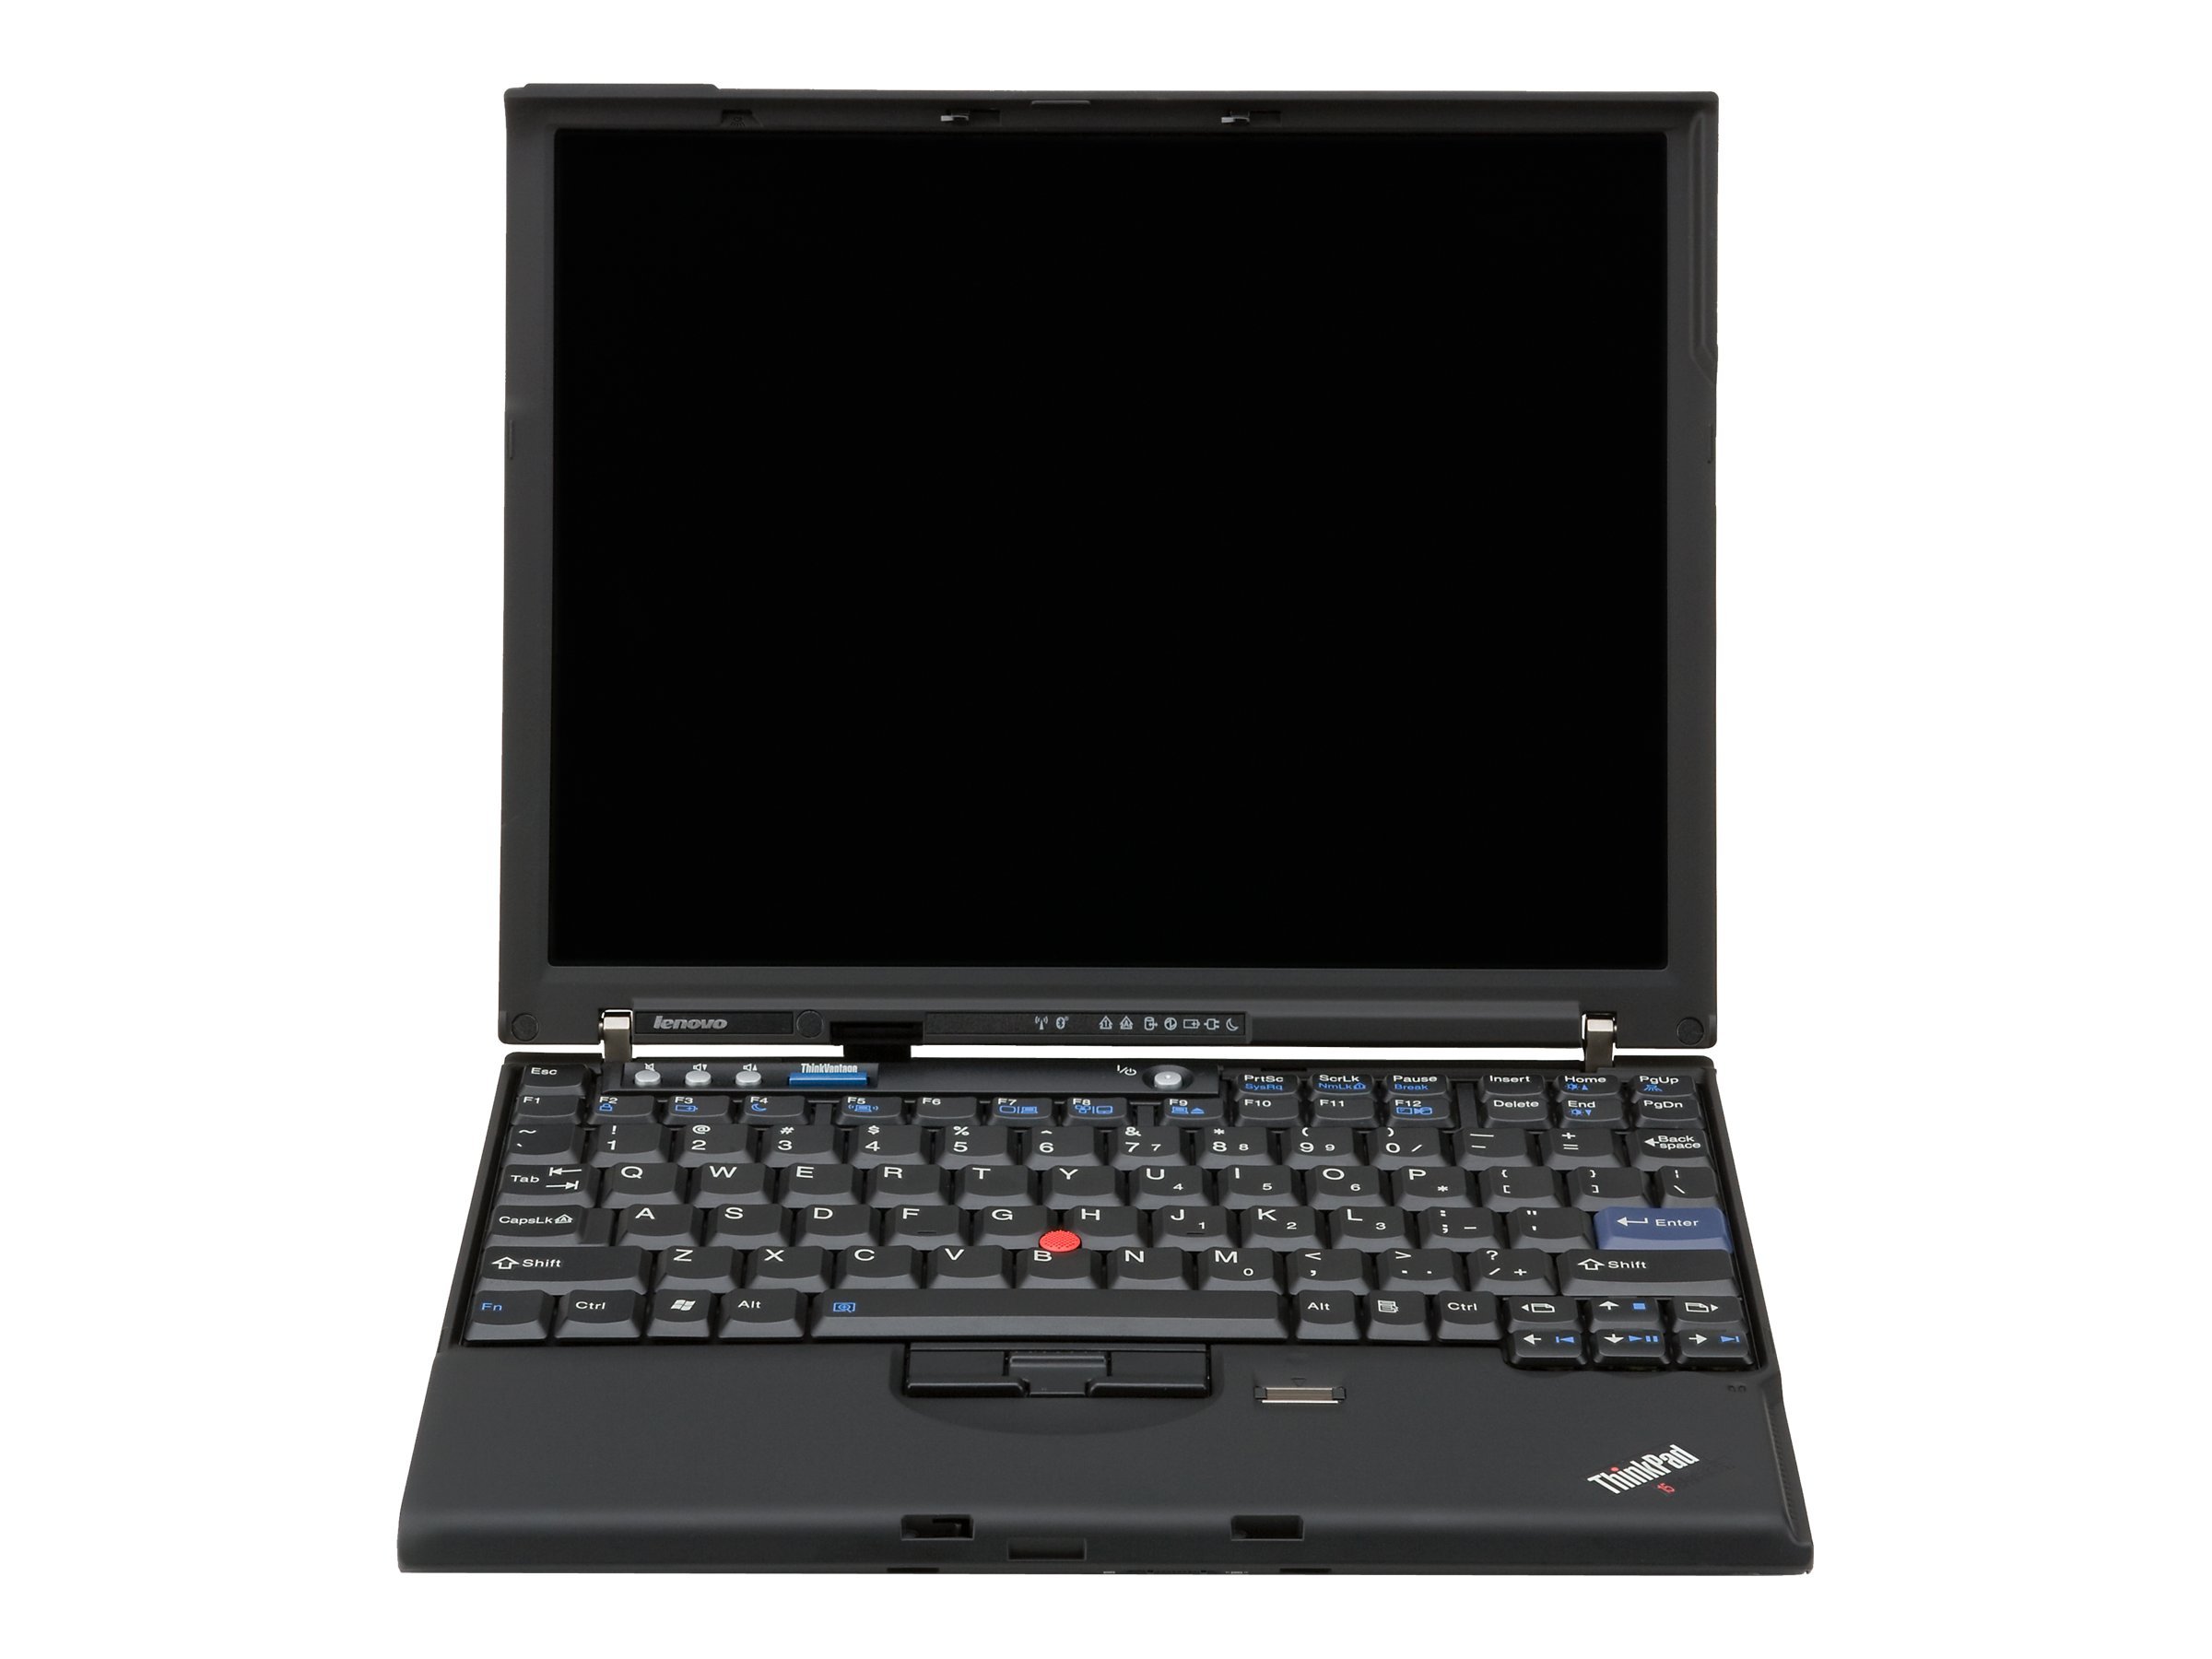 Lenovo THINKPAD x61s. Lenovo x61 Tablet. THINKPAD x61 Tablet -. Lenovo x270. Intel gma x3100